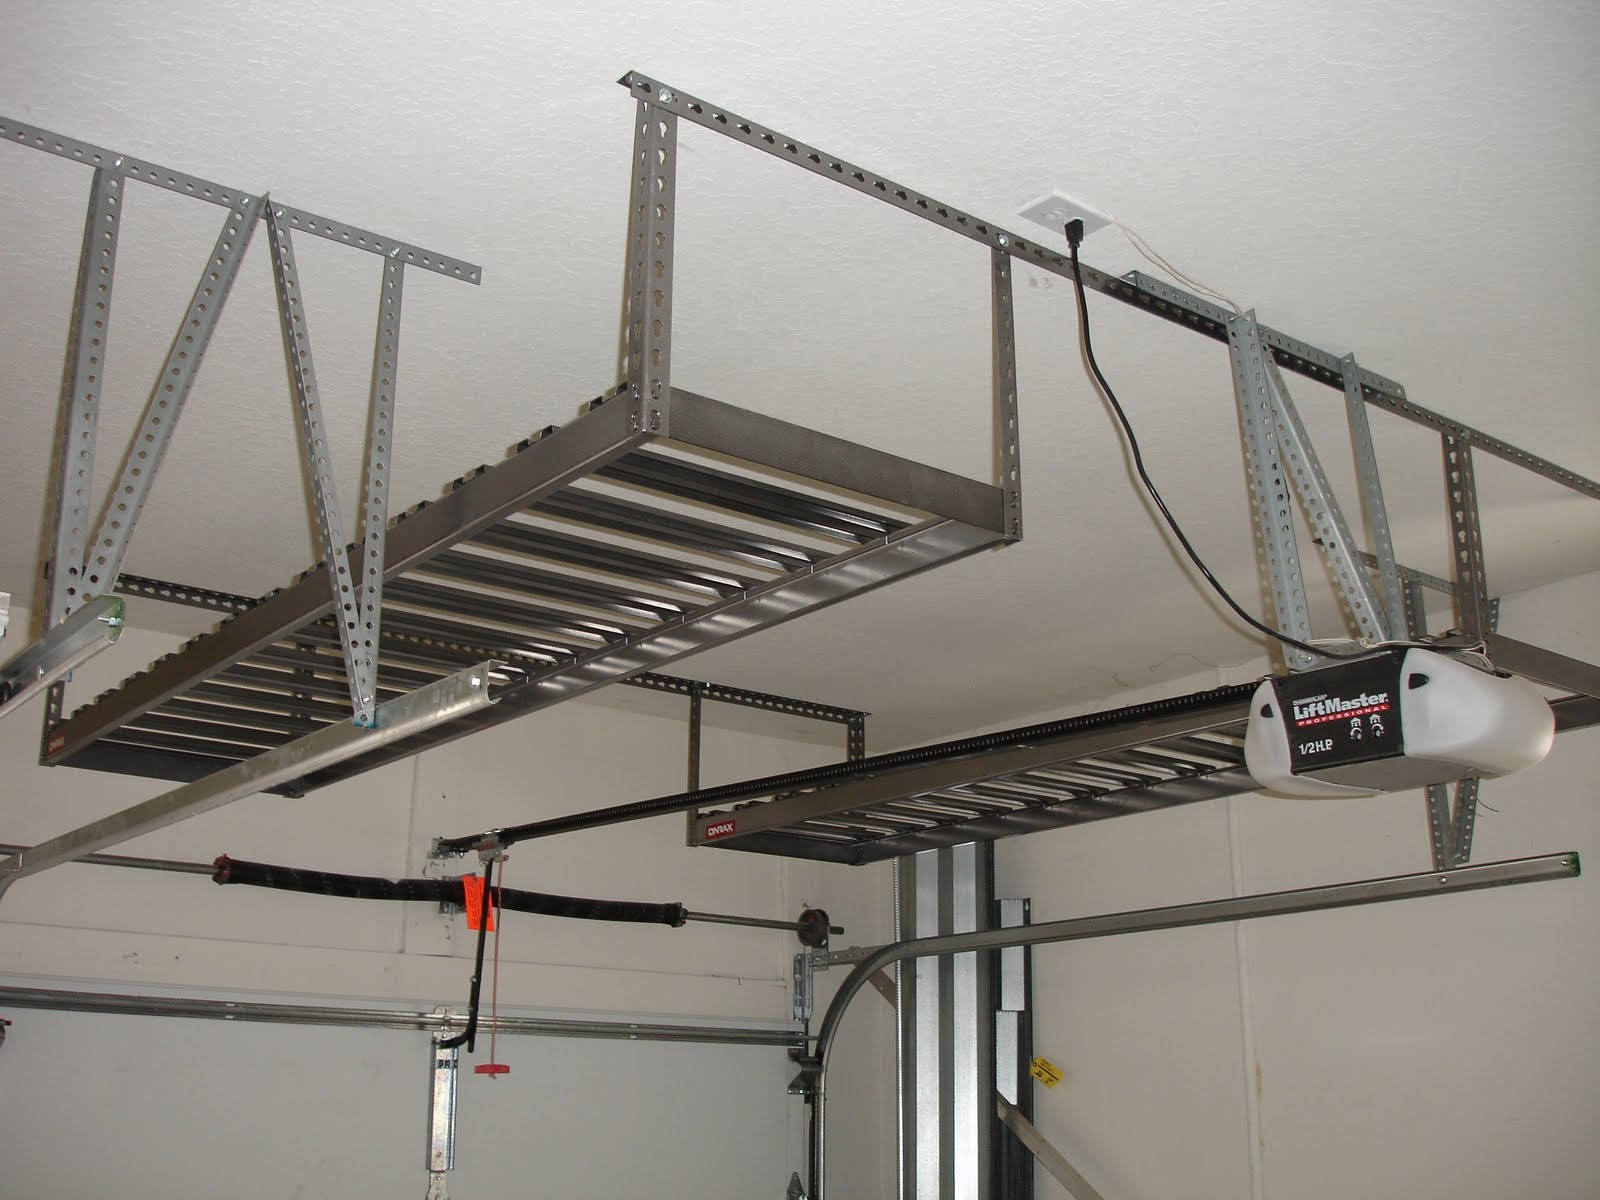 Best ideas about Best Overhead Garage Storage
. Save or Pin Hanging Ceiling DIY Custom Overhead Garage Storage Rack Now.